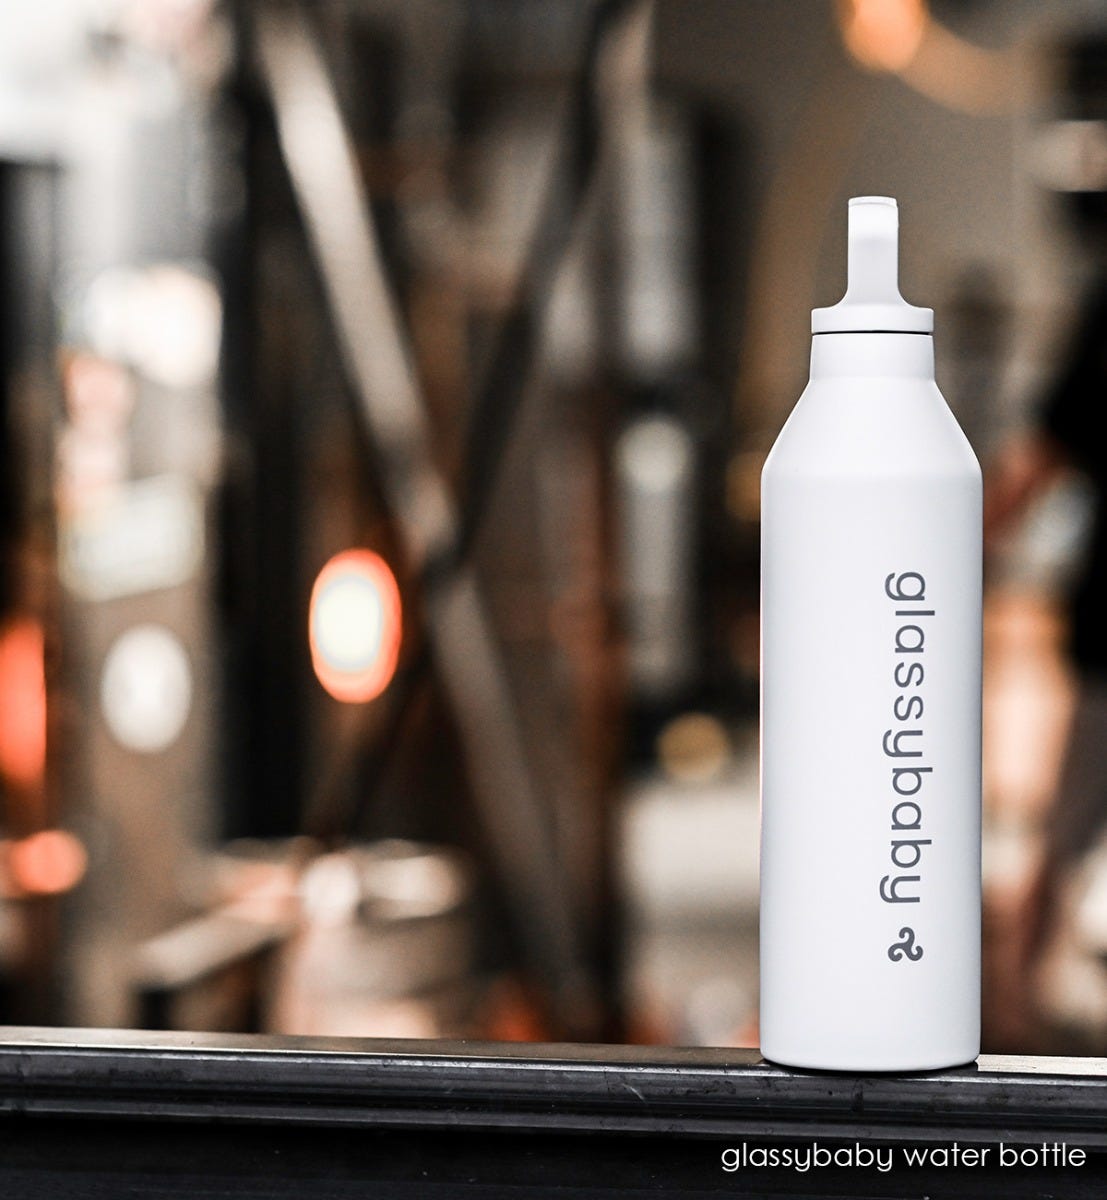 miir water bottle printed with glassybaby logo